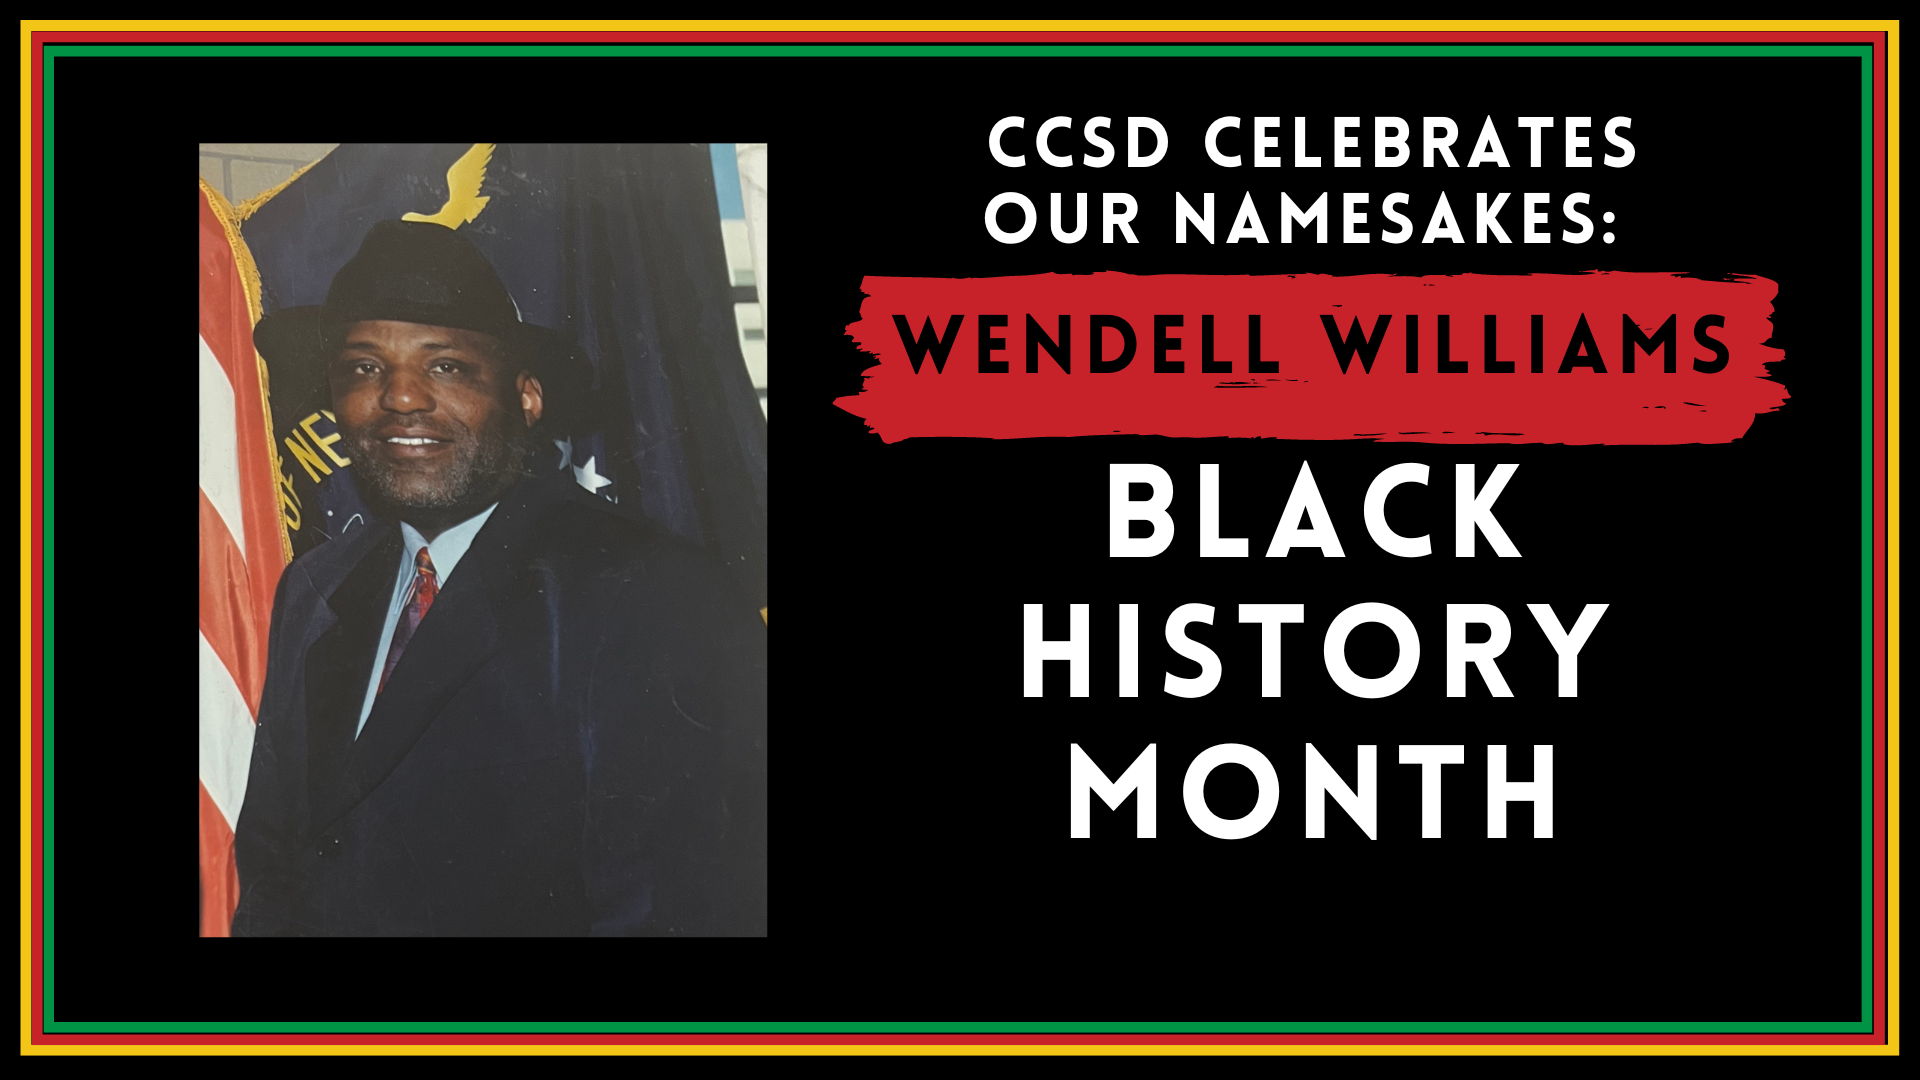 CCSD celebrates its namesakes: Wendell Williams